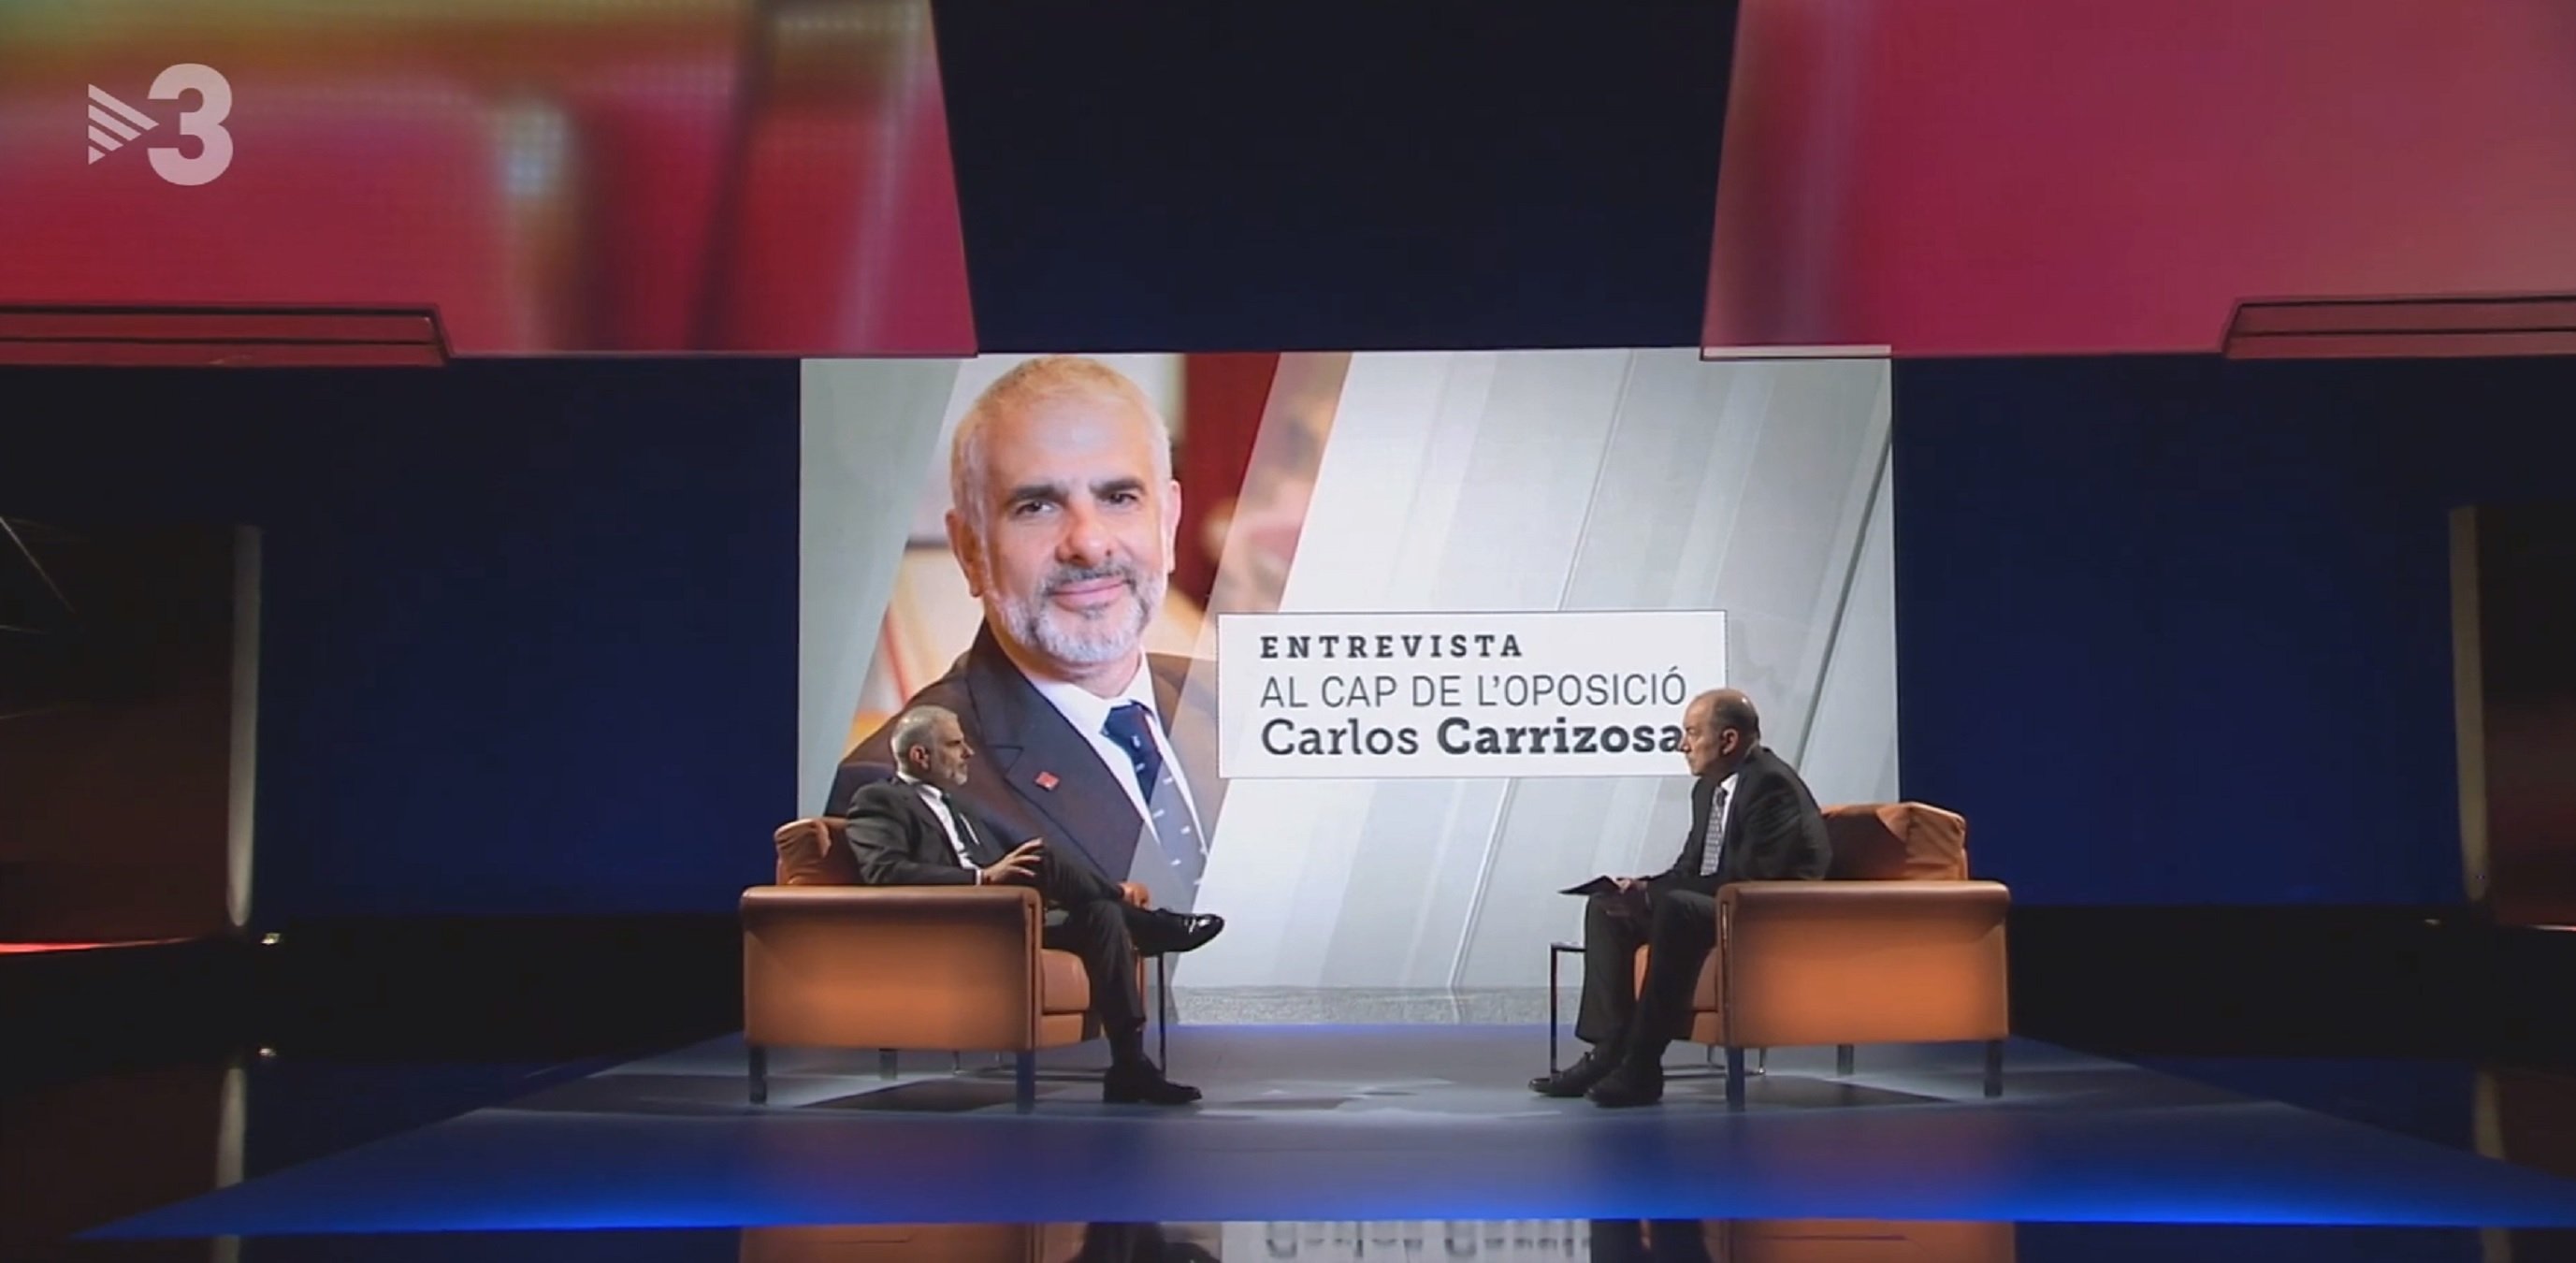 Un presentador indepe de TV3 explota contra Carrizosa: "vergüenza intolerable"